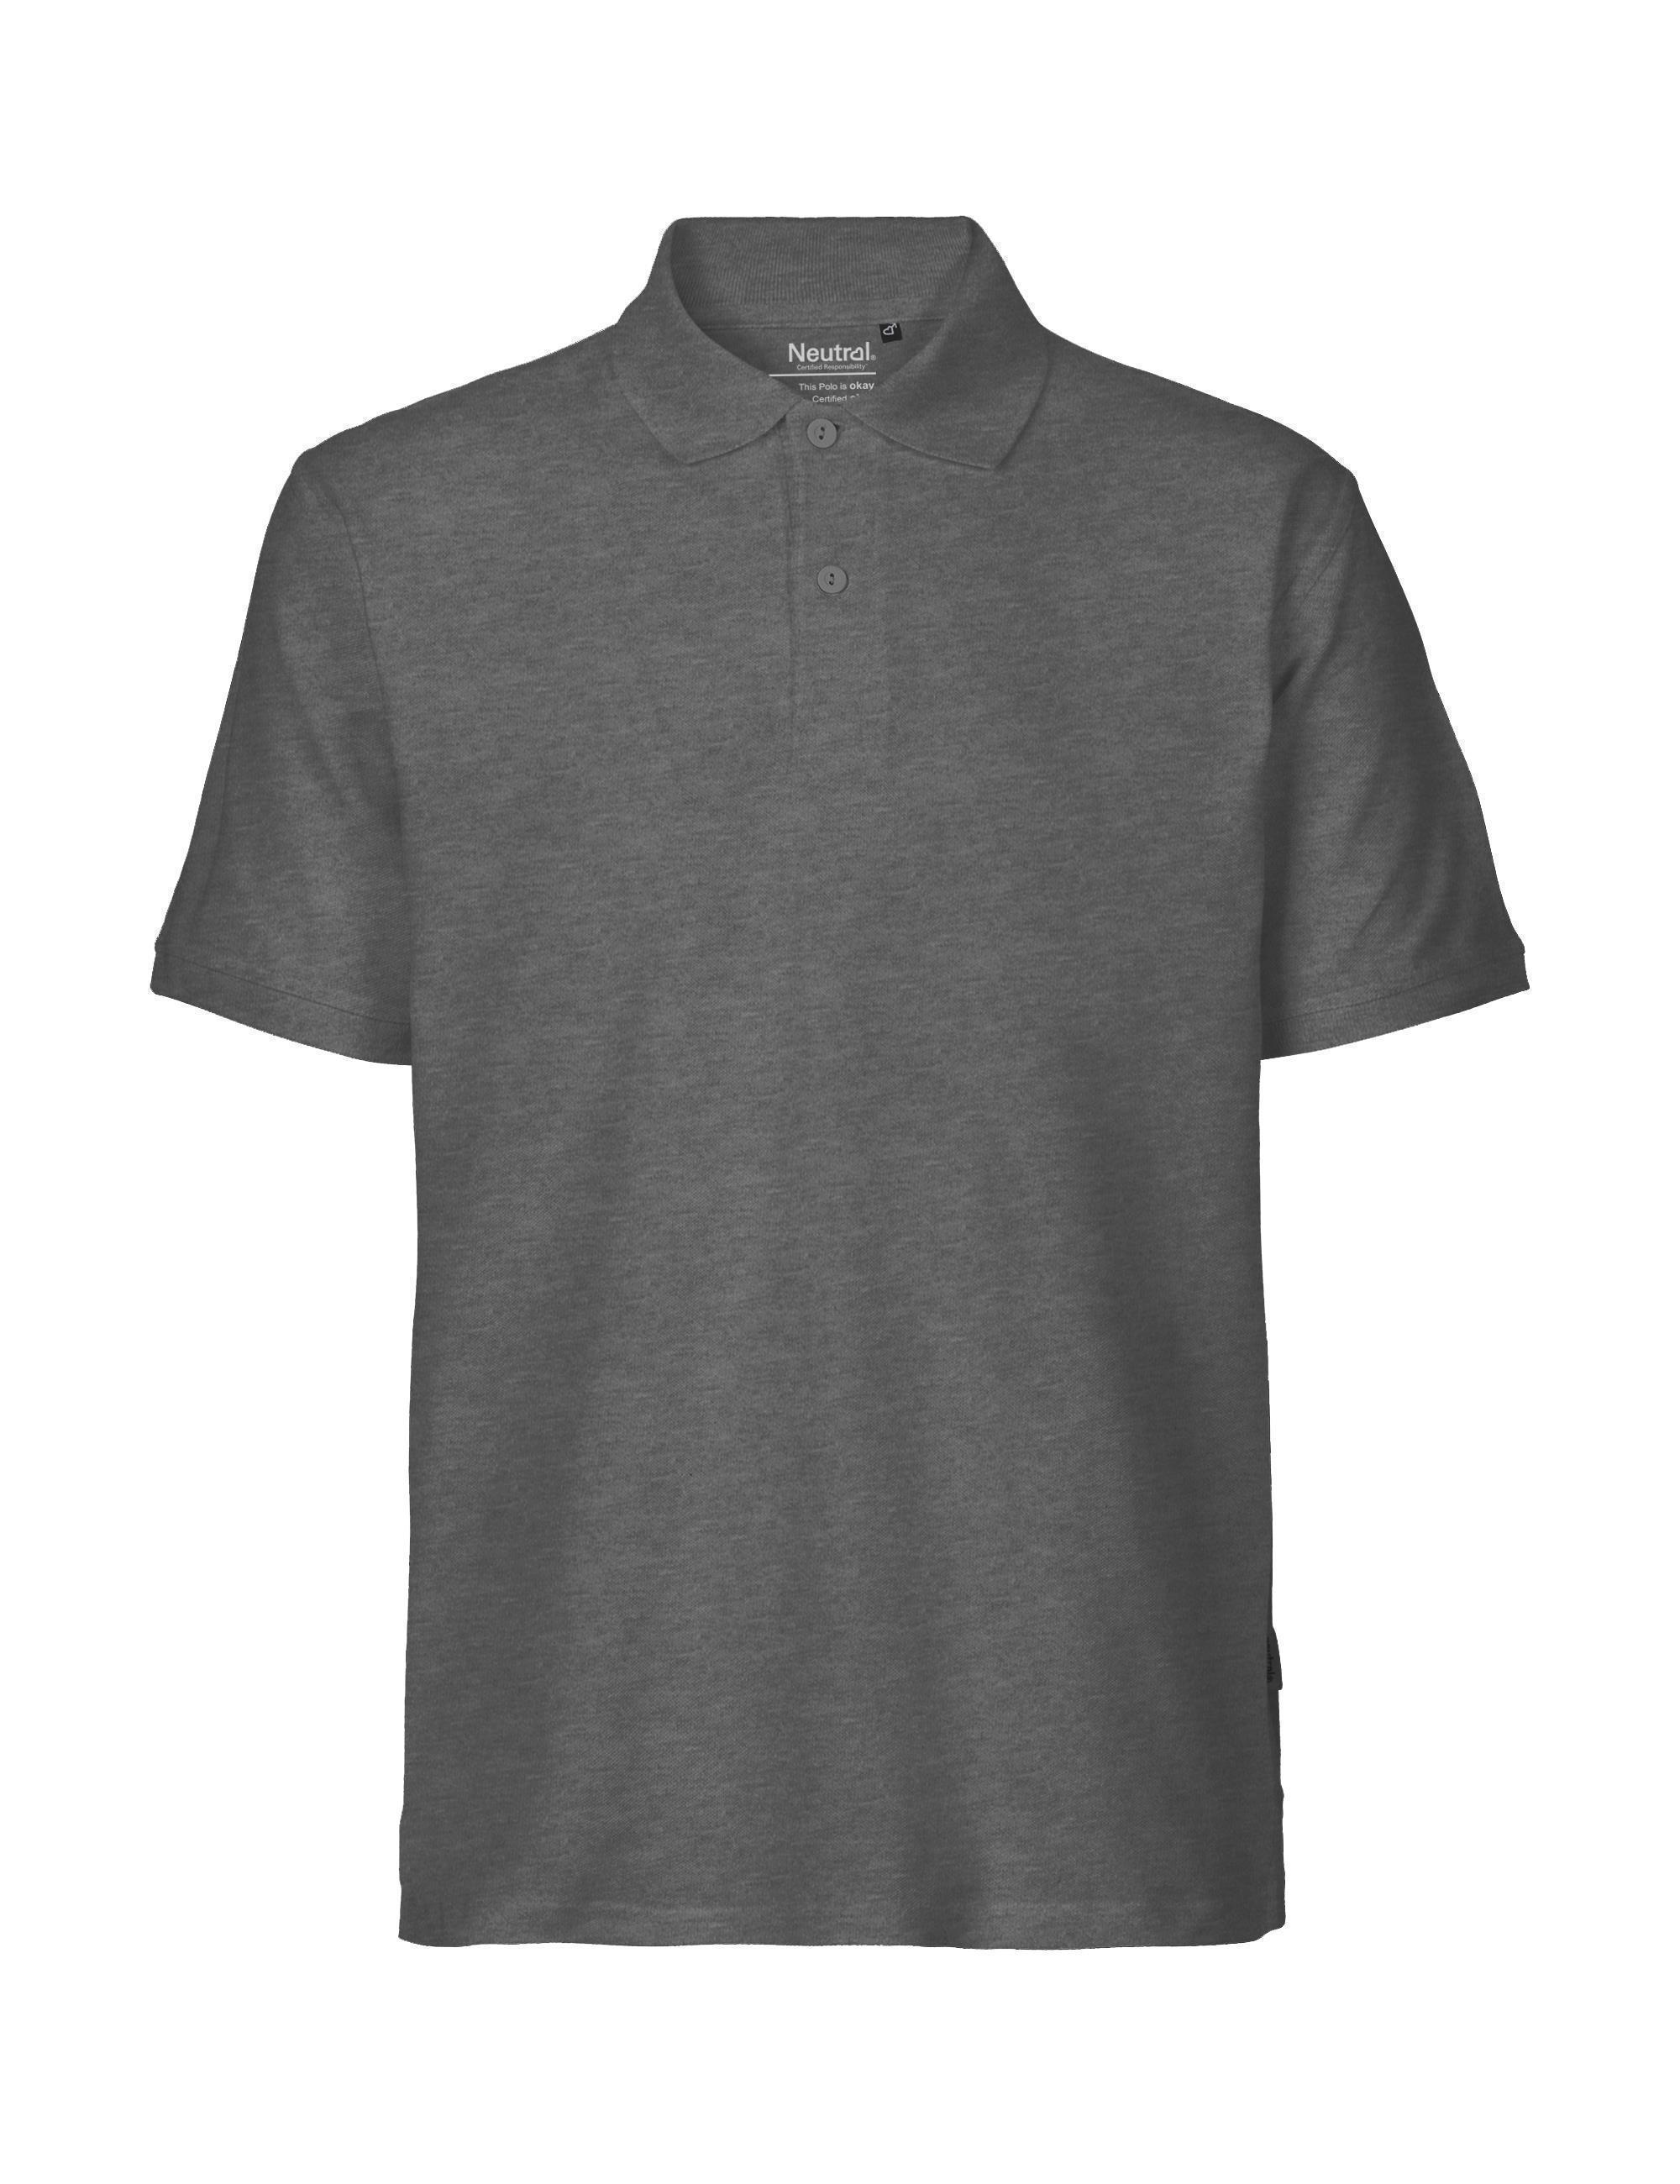 Organic Fairtrade Men's Polo Shirt 235 g/m² Neutral®